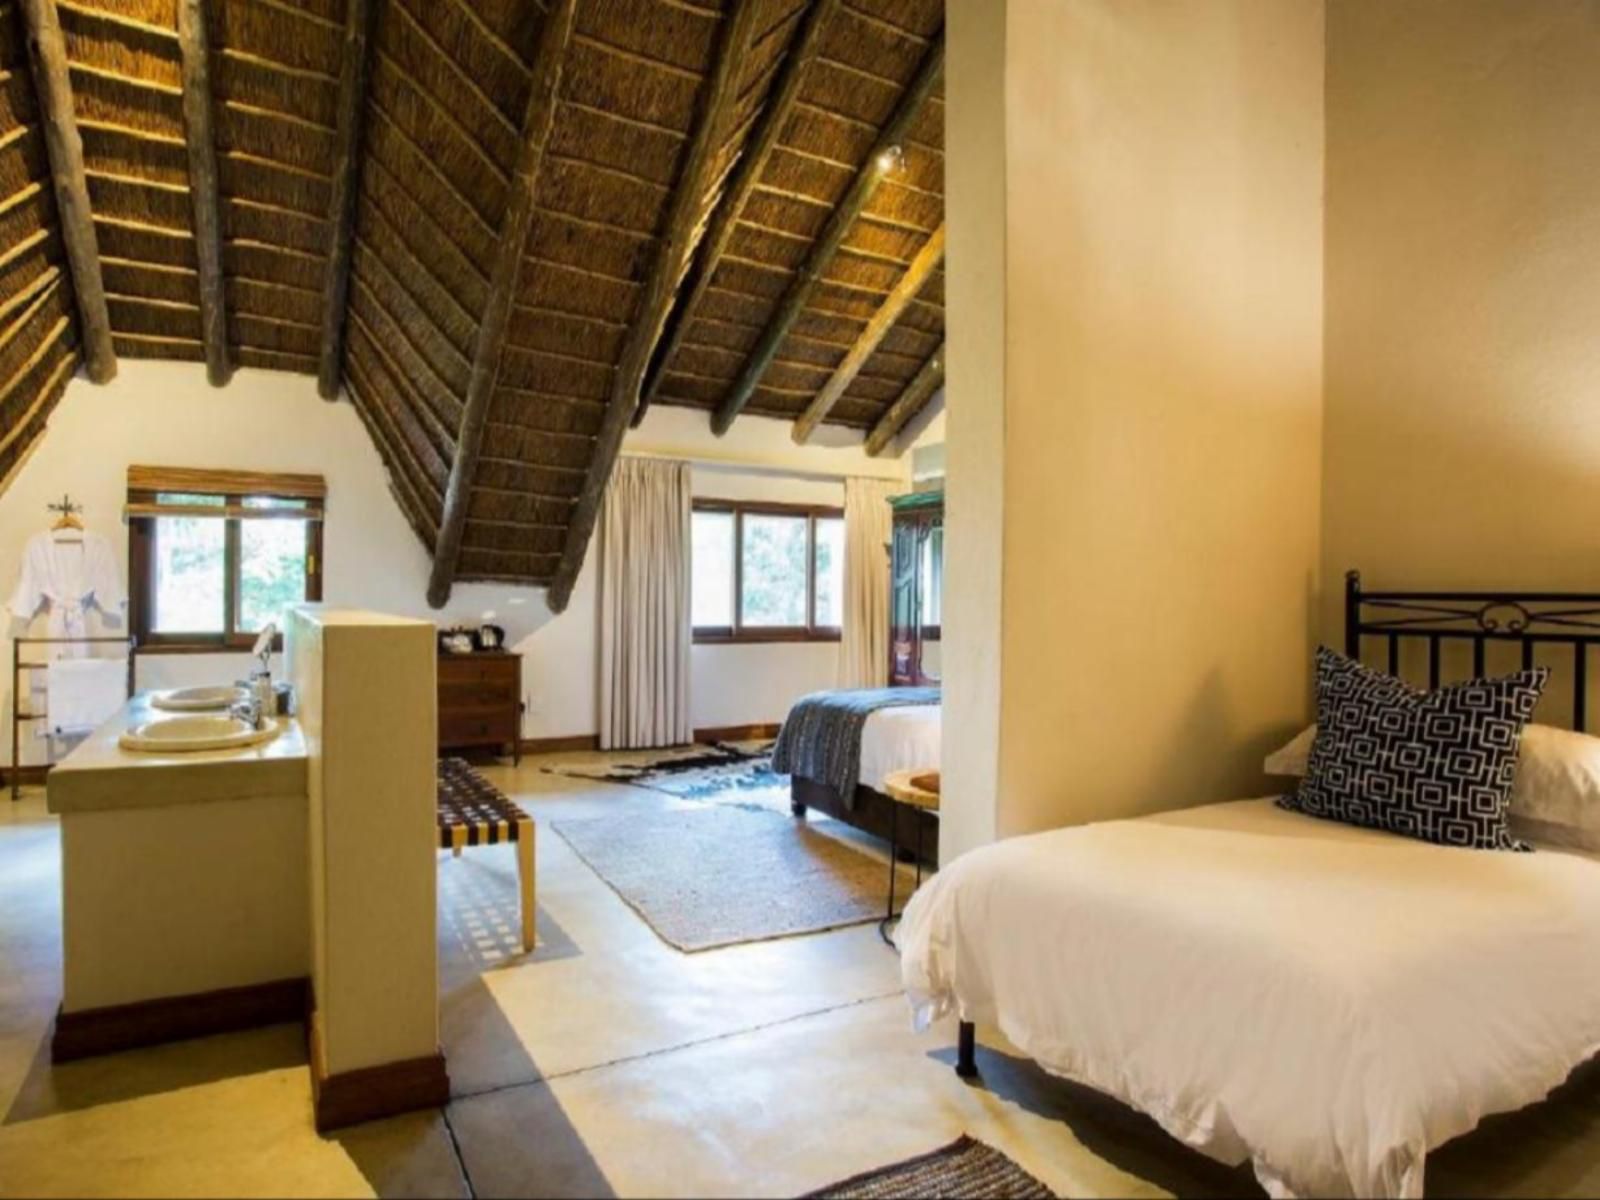 Buhala Lodge Malelane Mpumalanga South Africa Bedroom